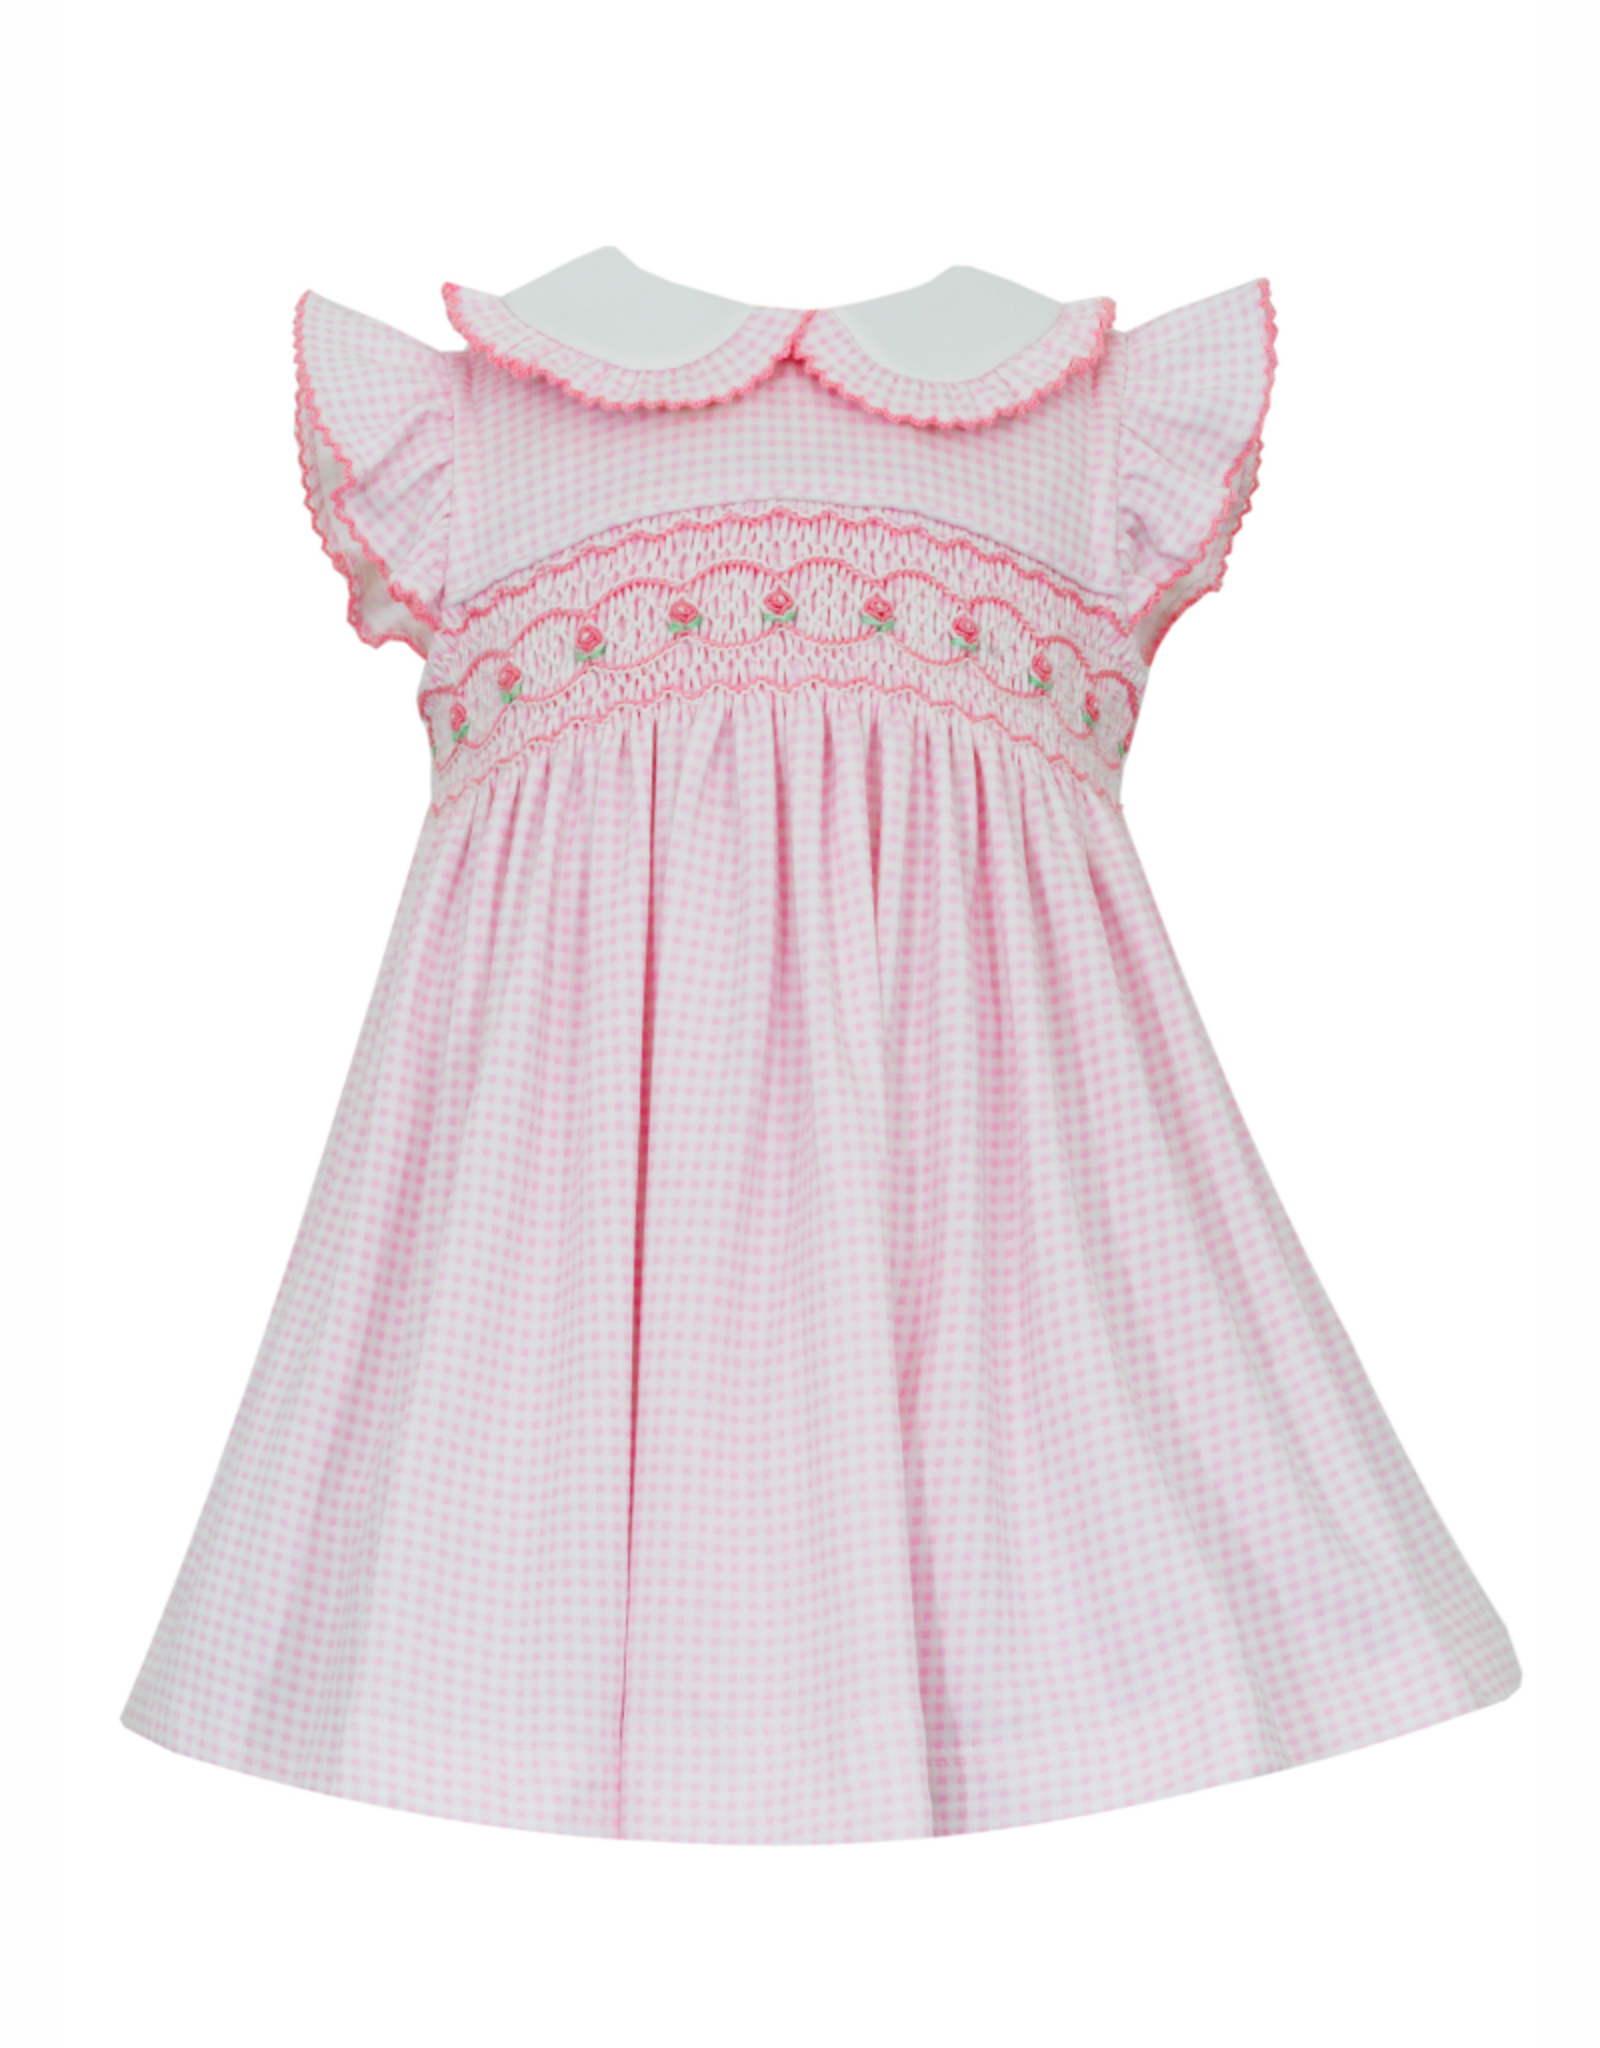 Petit Bebe Pink Gingham Knit Smocked Dress